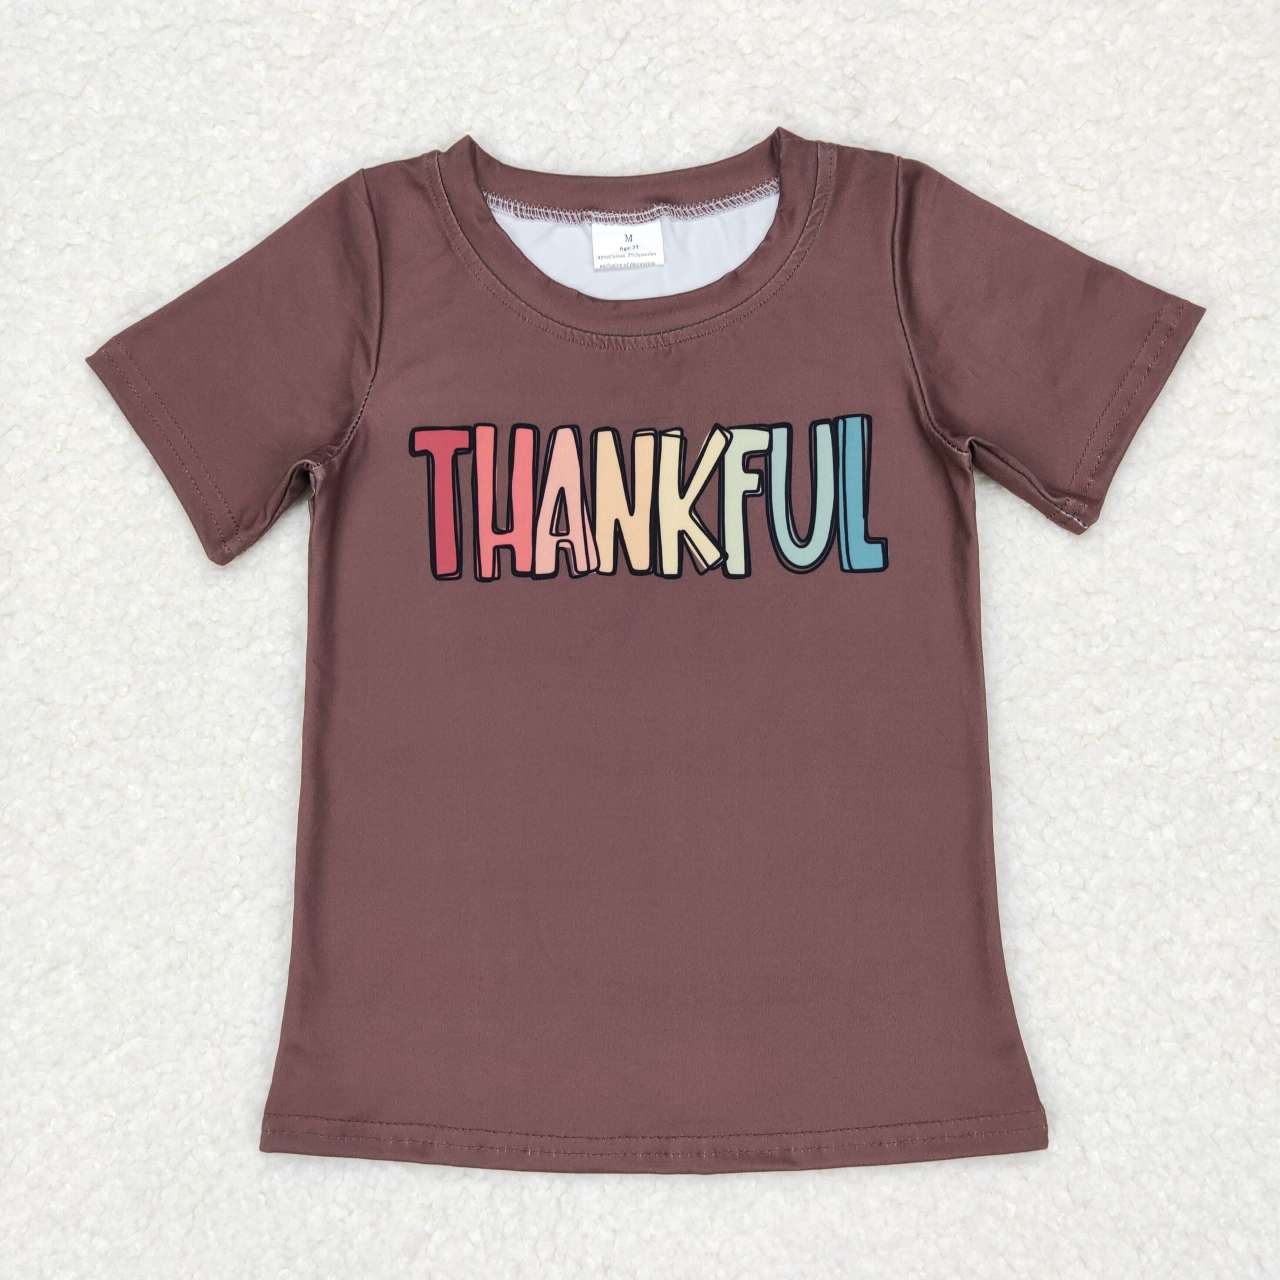 BT0327 baby boy clothes brown boy thankful tshirt thanksgiving top